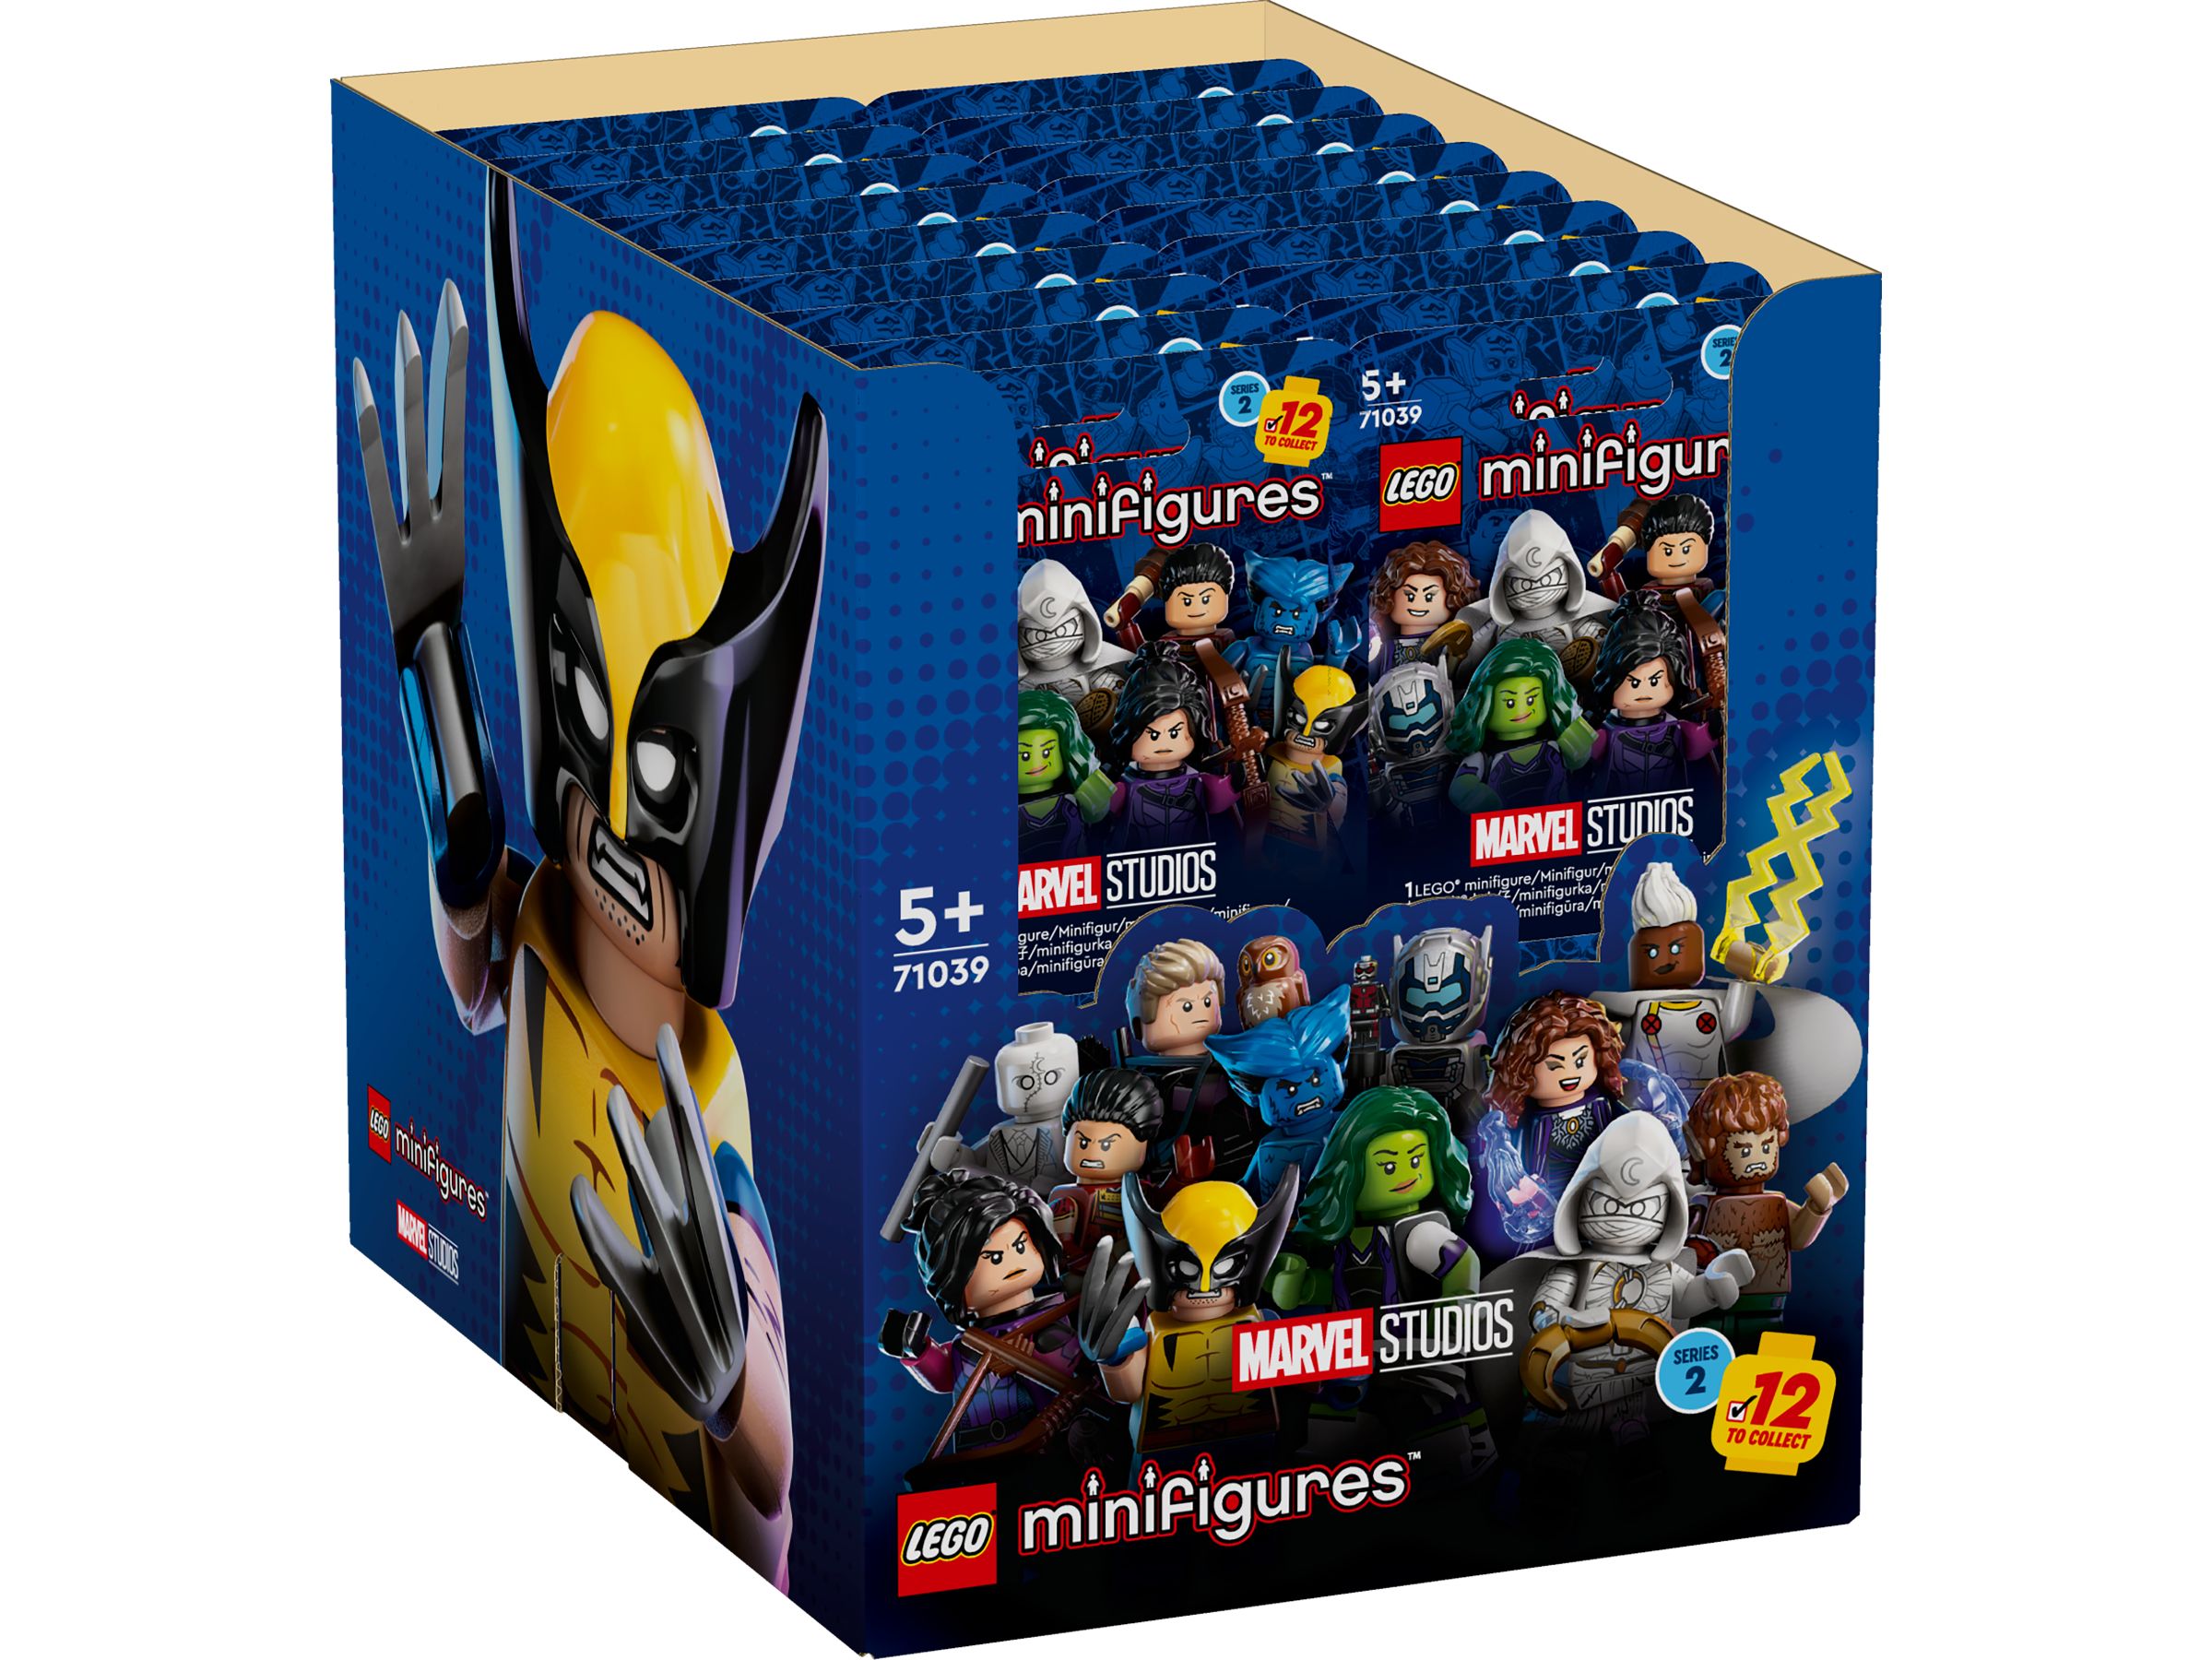 LEGO Collectable Minifigures 71039 Marvel Minifiguren Serie 2 LEGO_71039_display1_v110.jpg